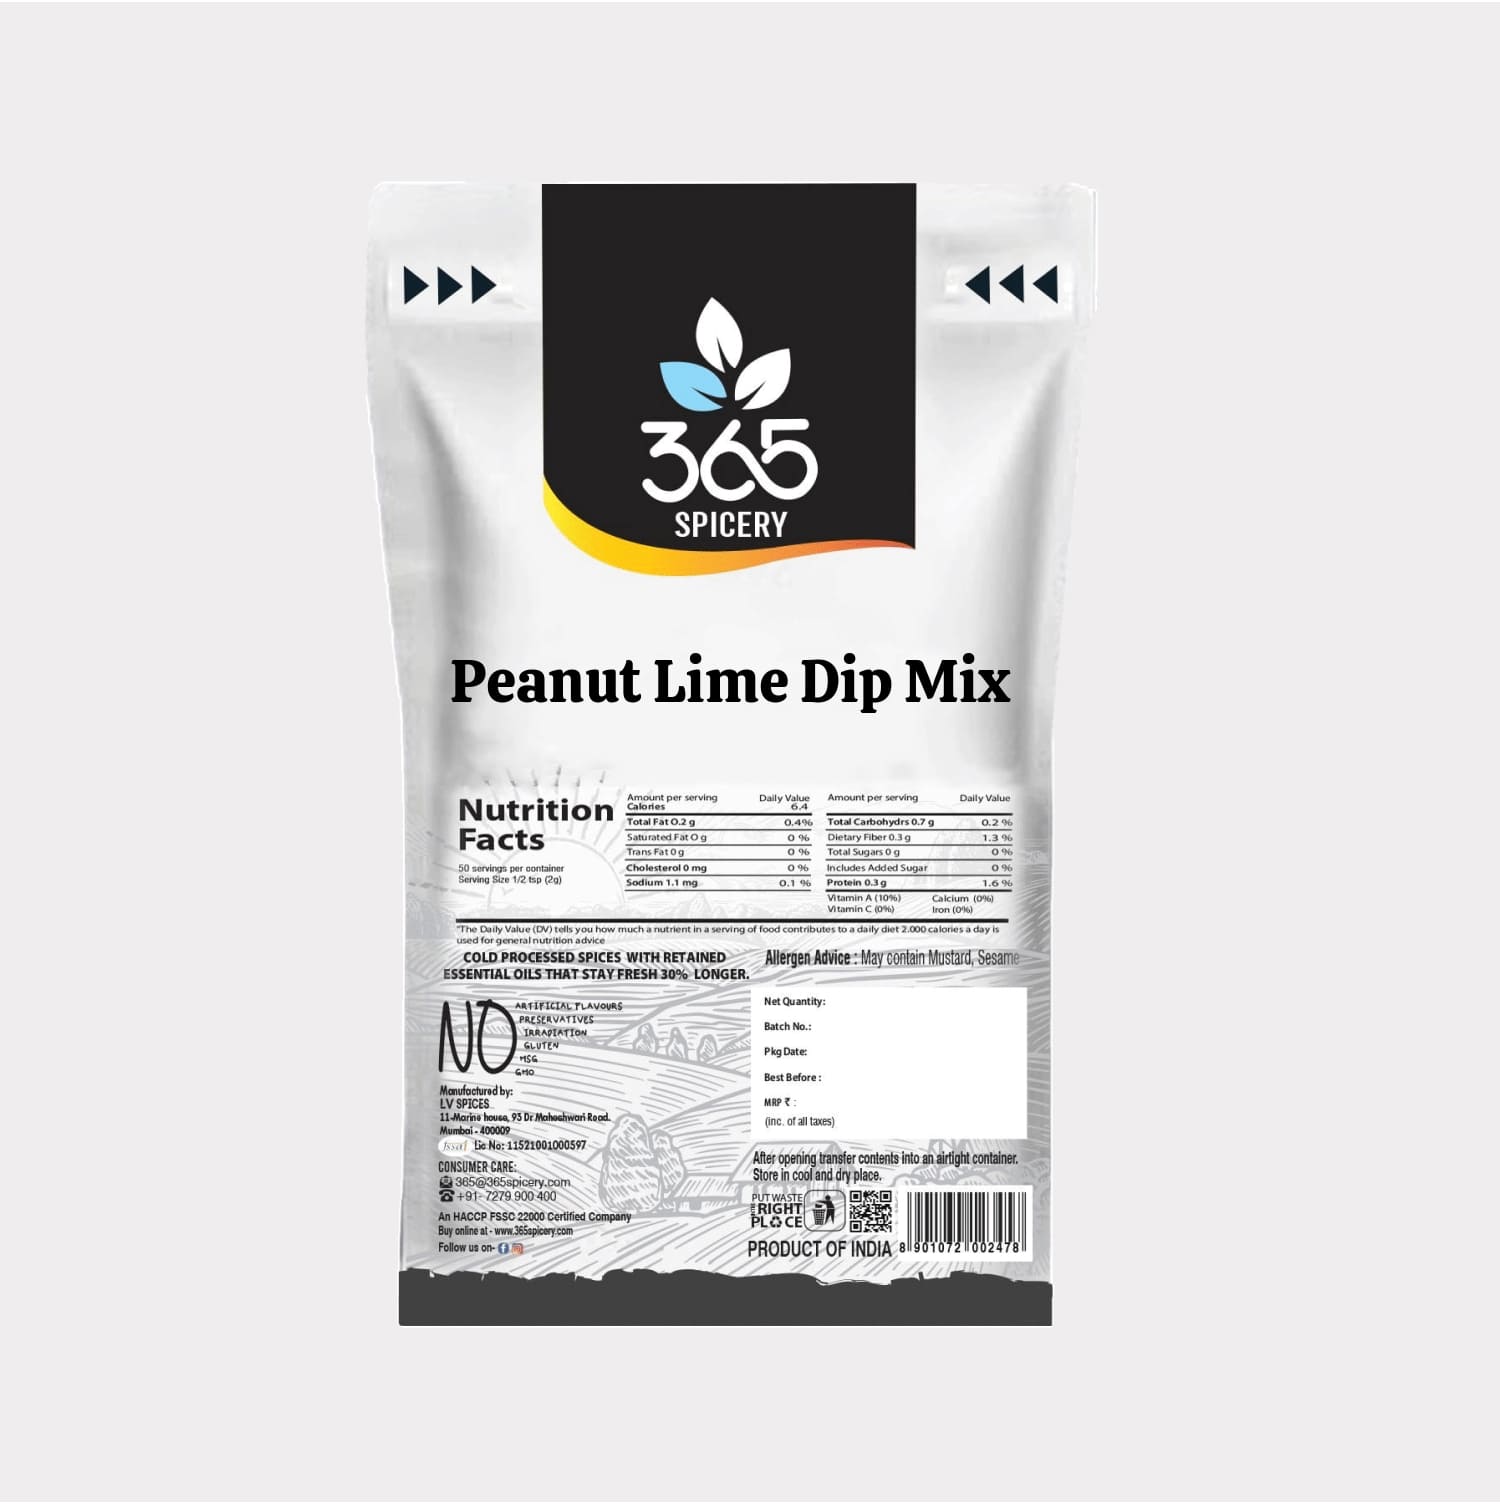 Peanut Lime Dip Mix